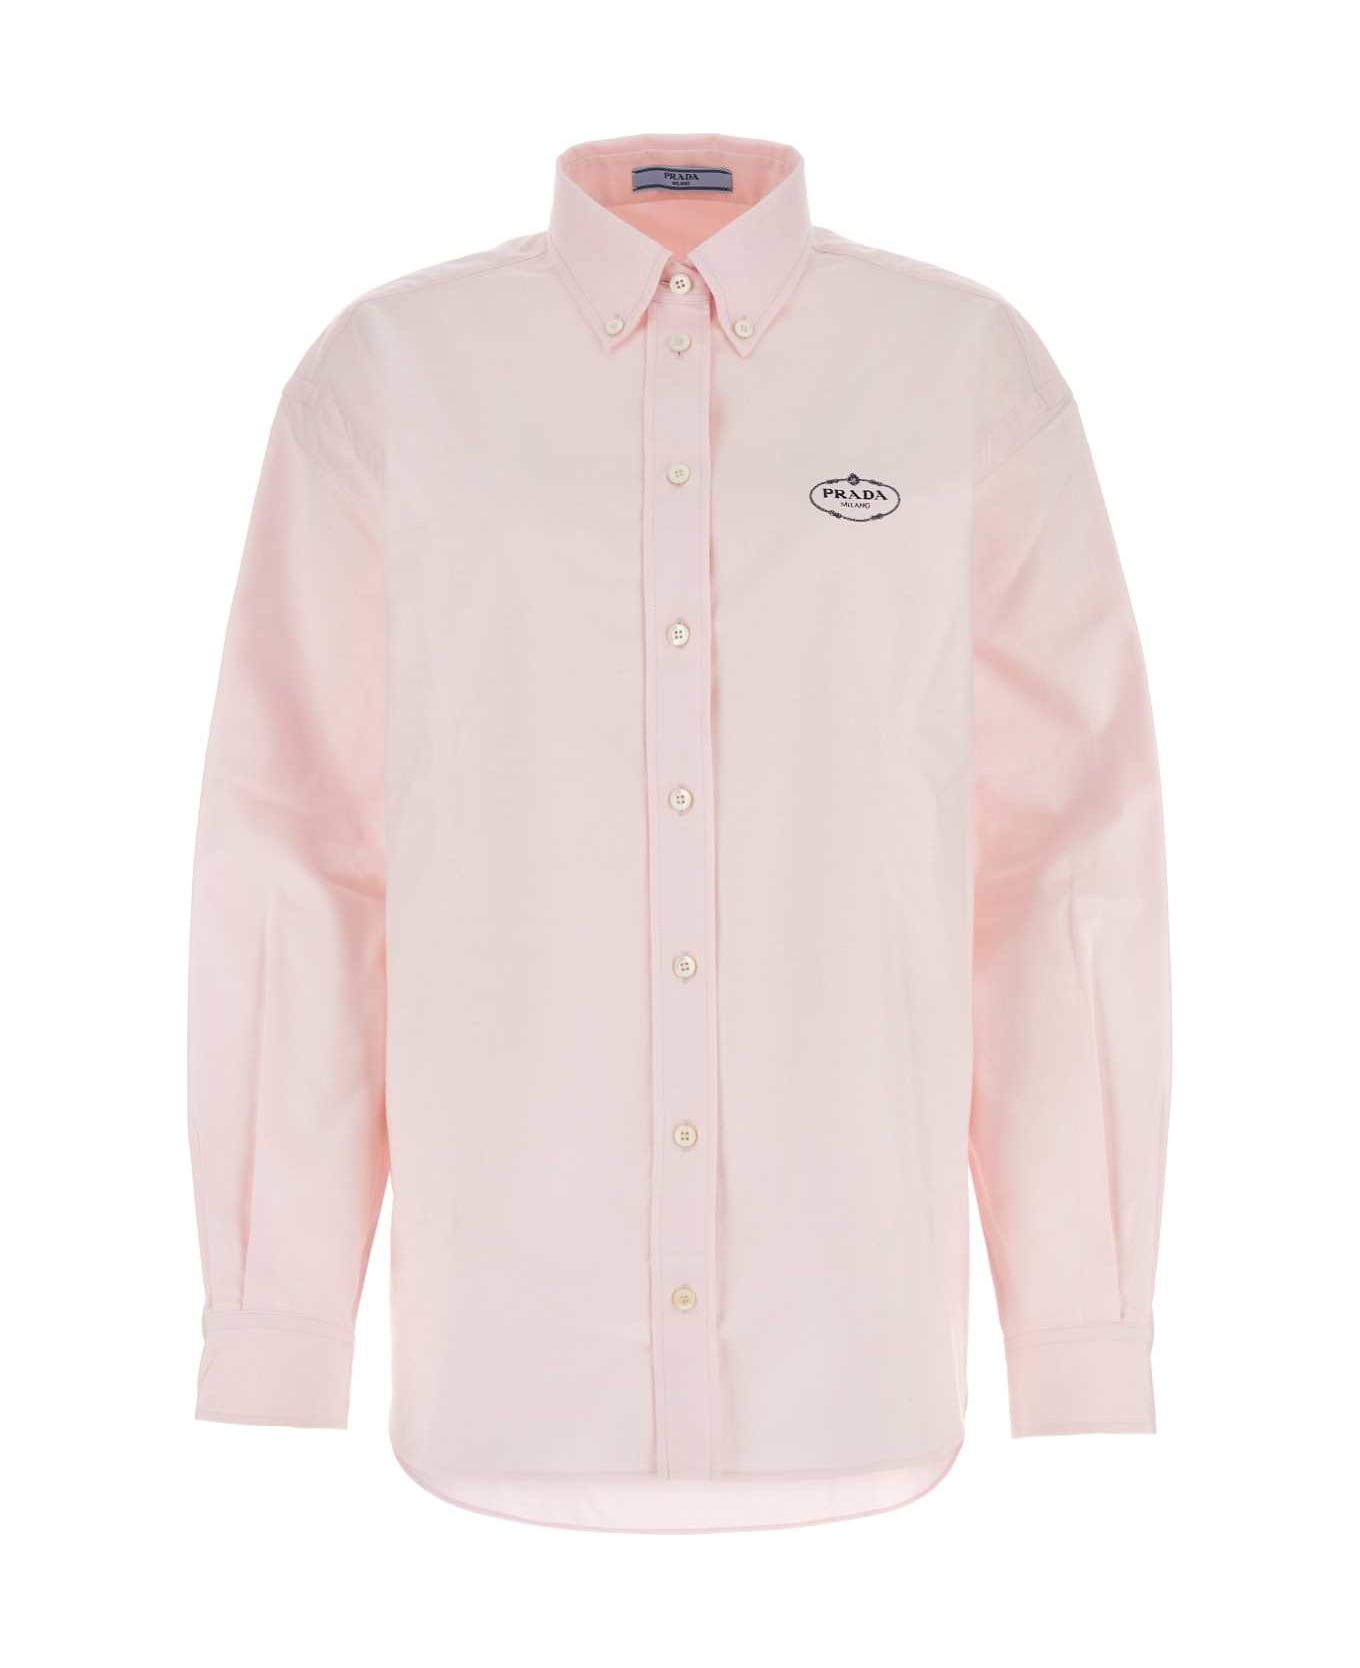 Prada Light Pink Oxford Oversize Shirt - ROSA シャツ